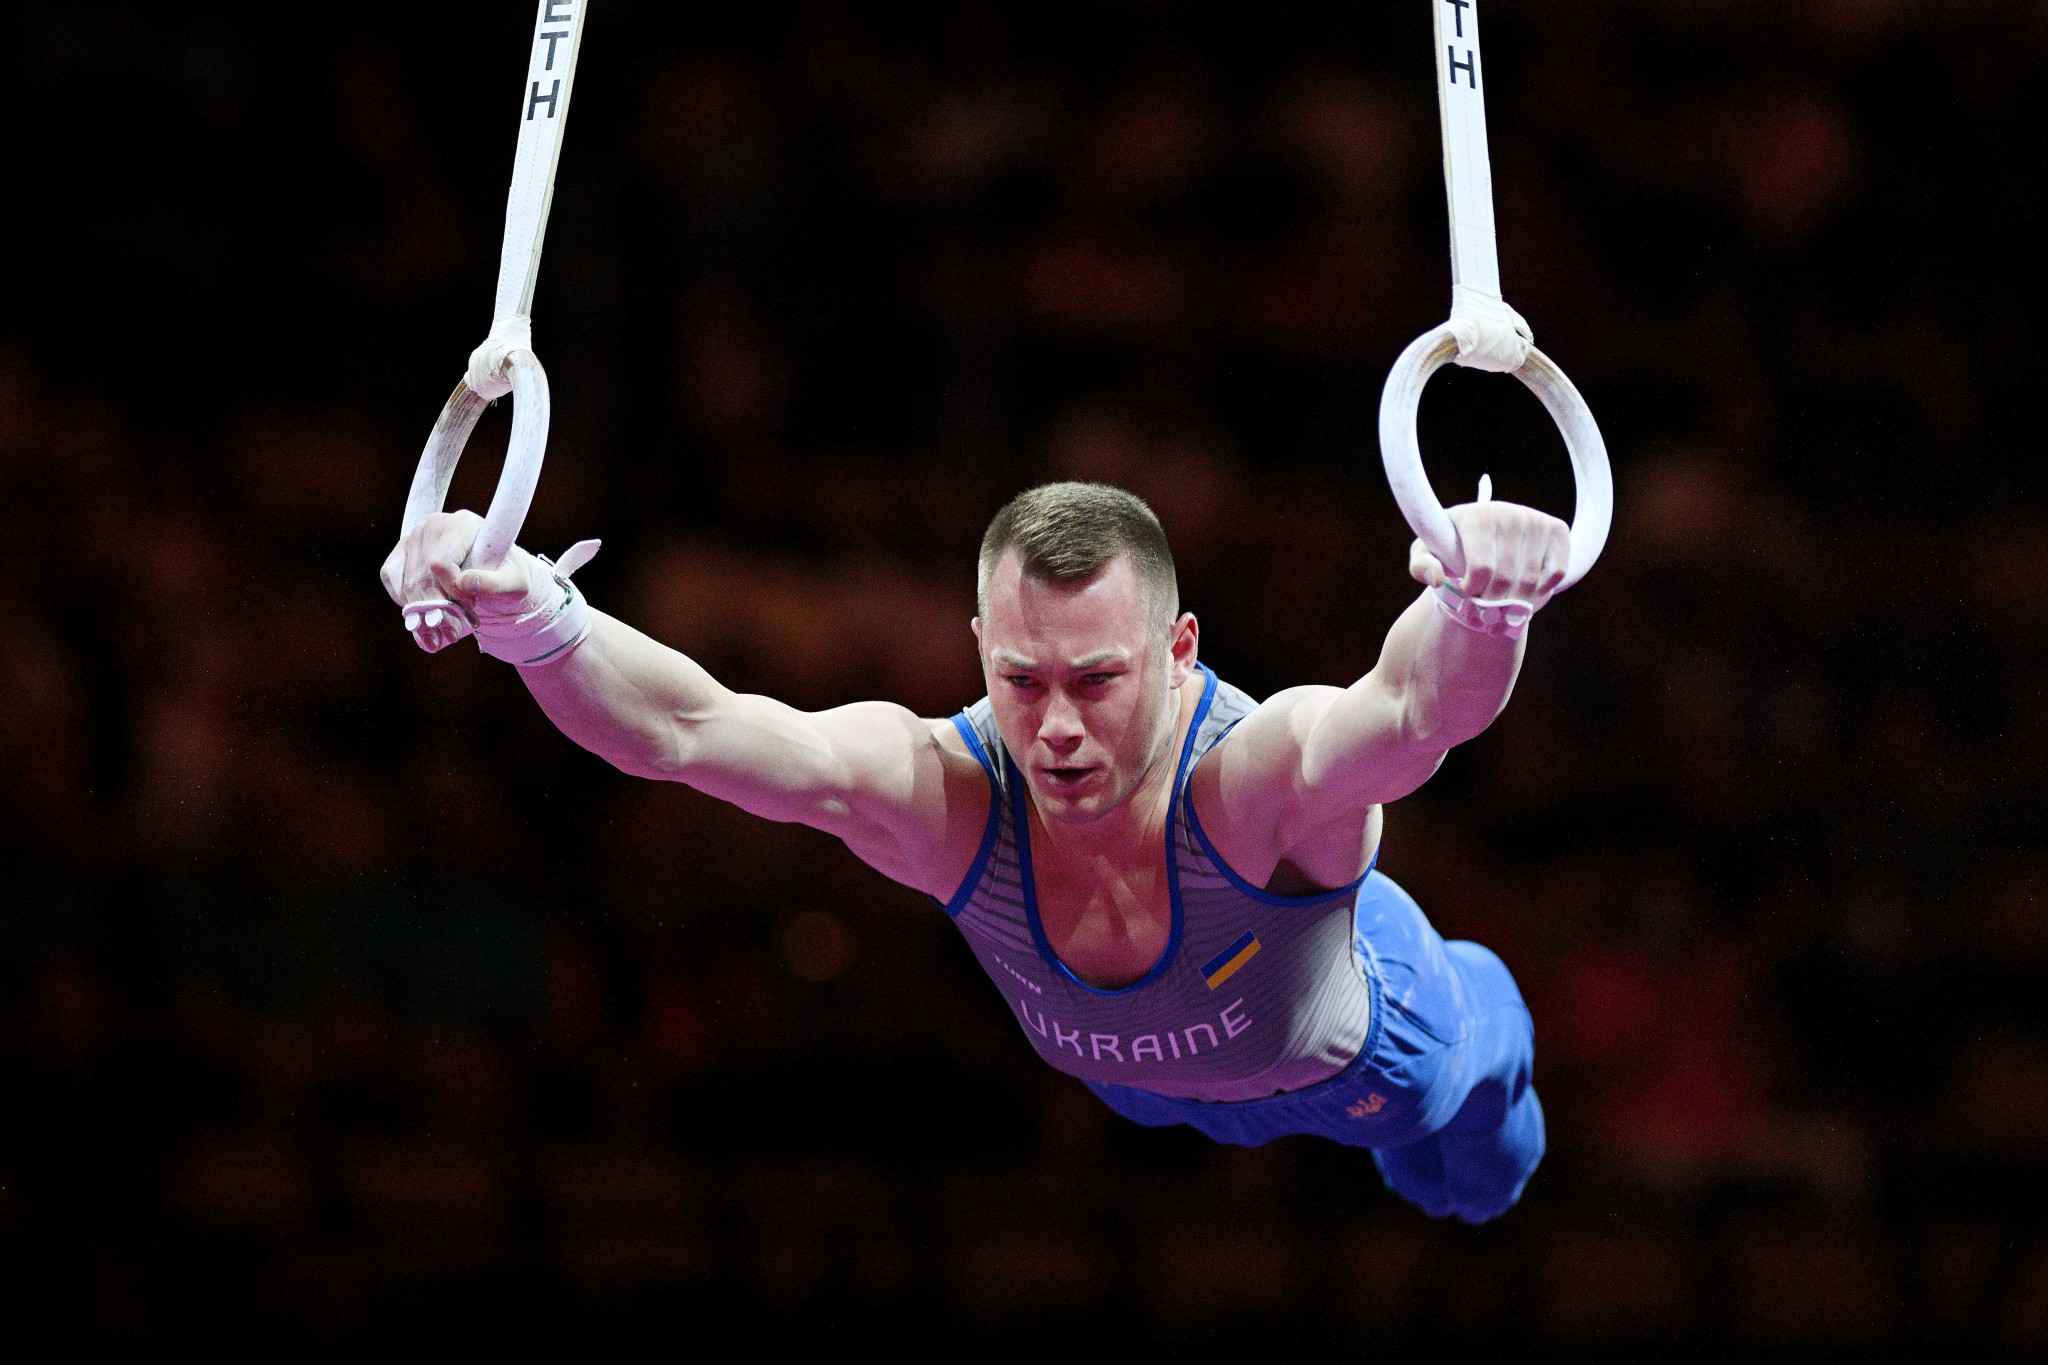 Exclusive: Ukraine plans European Gymnastics Congress boycott due to Russian and Belarusian involvement